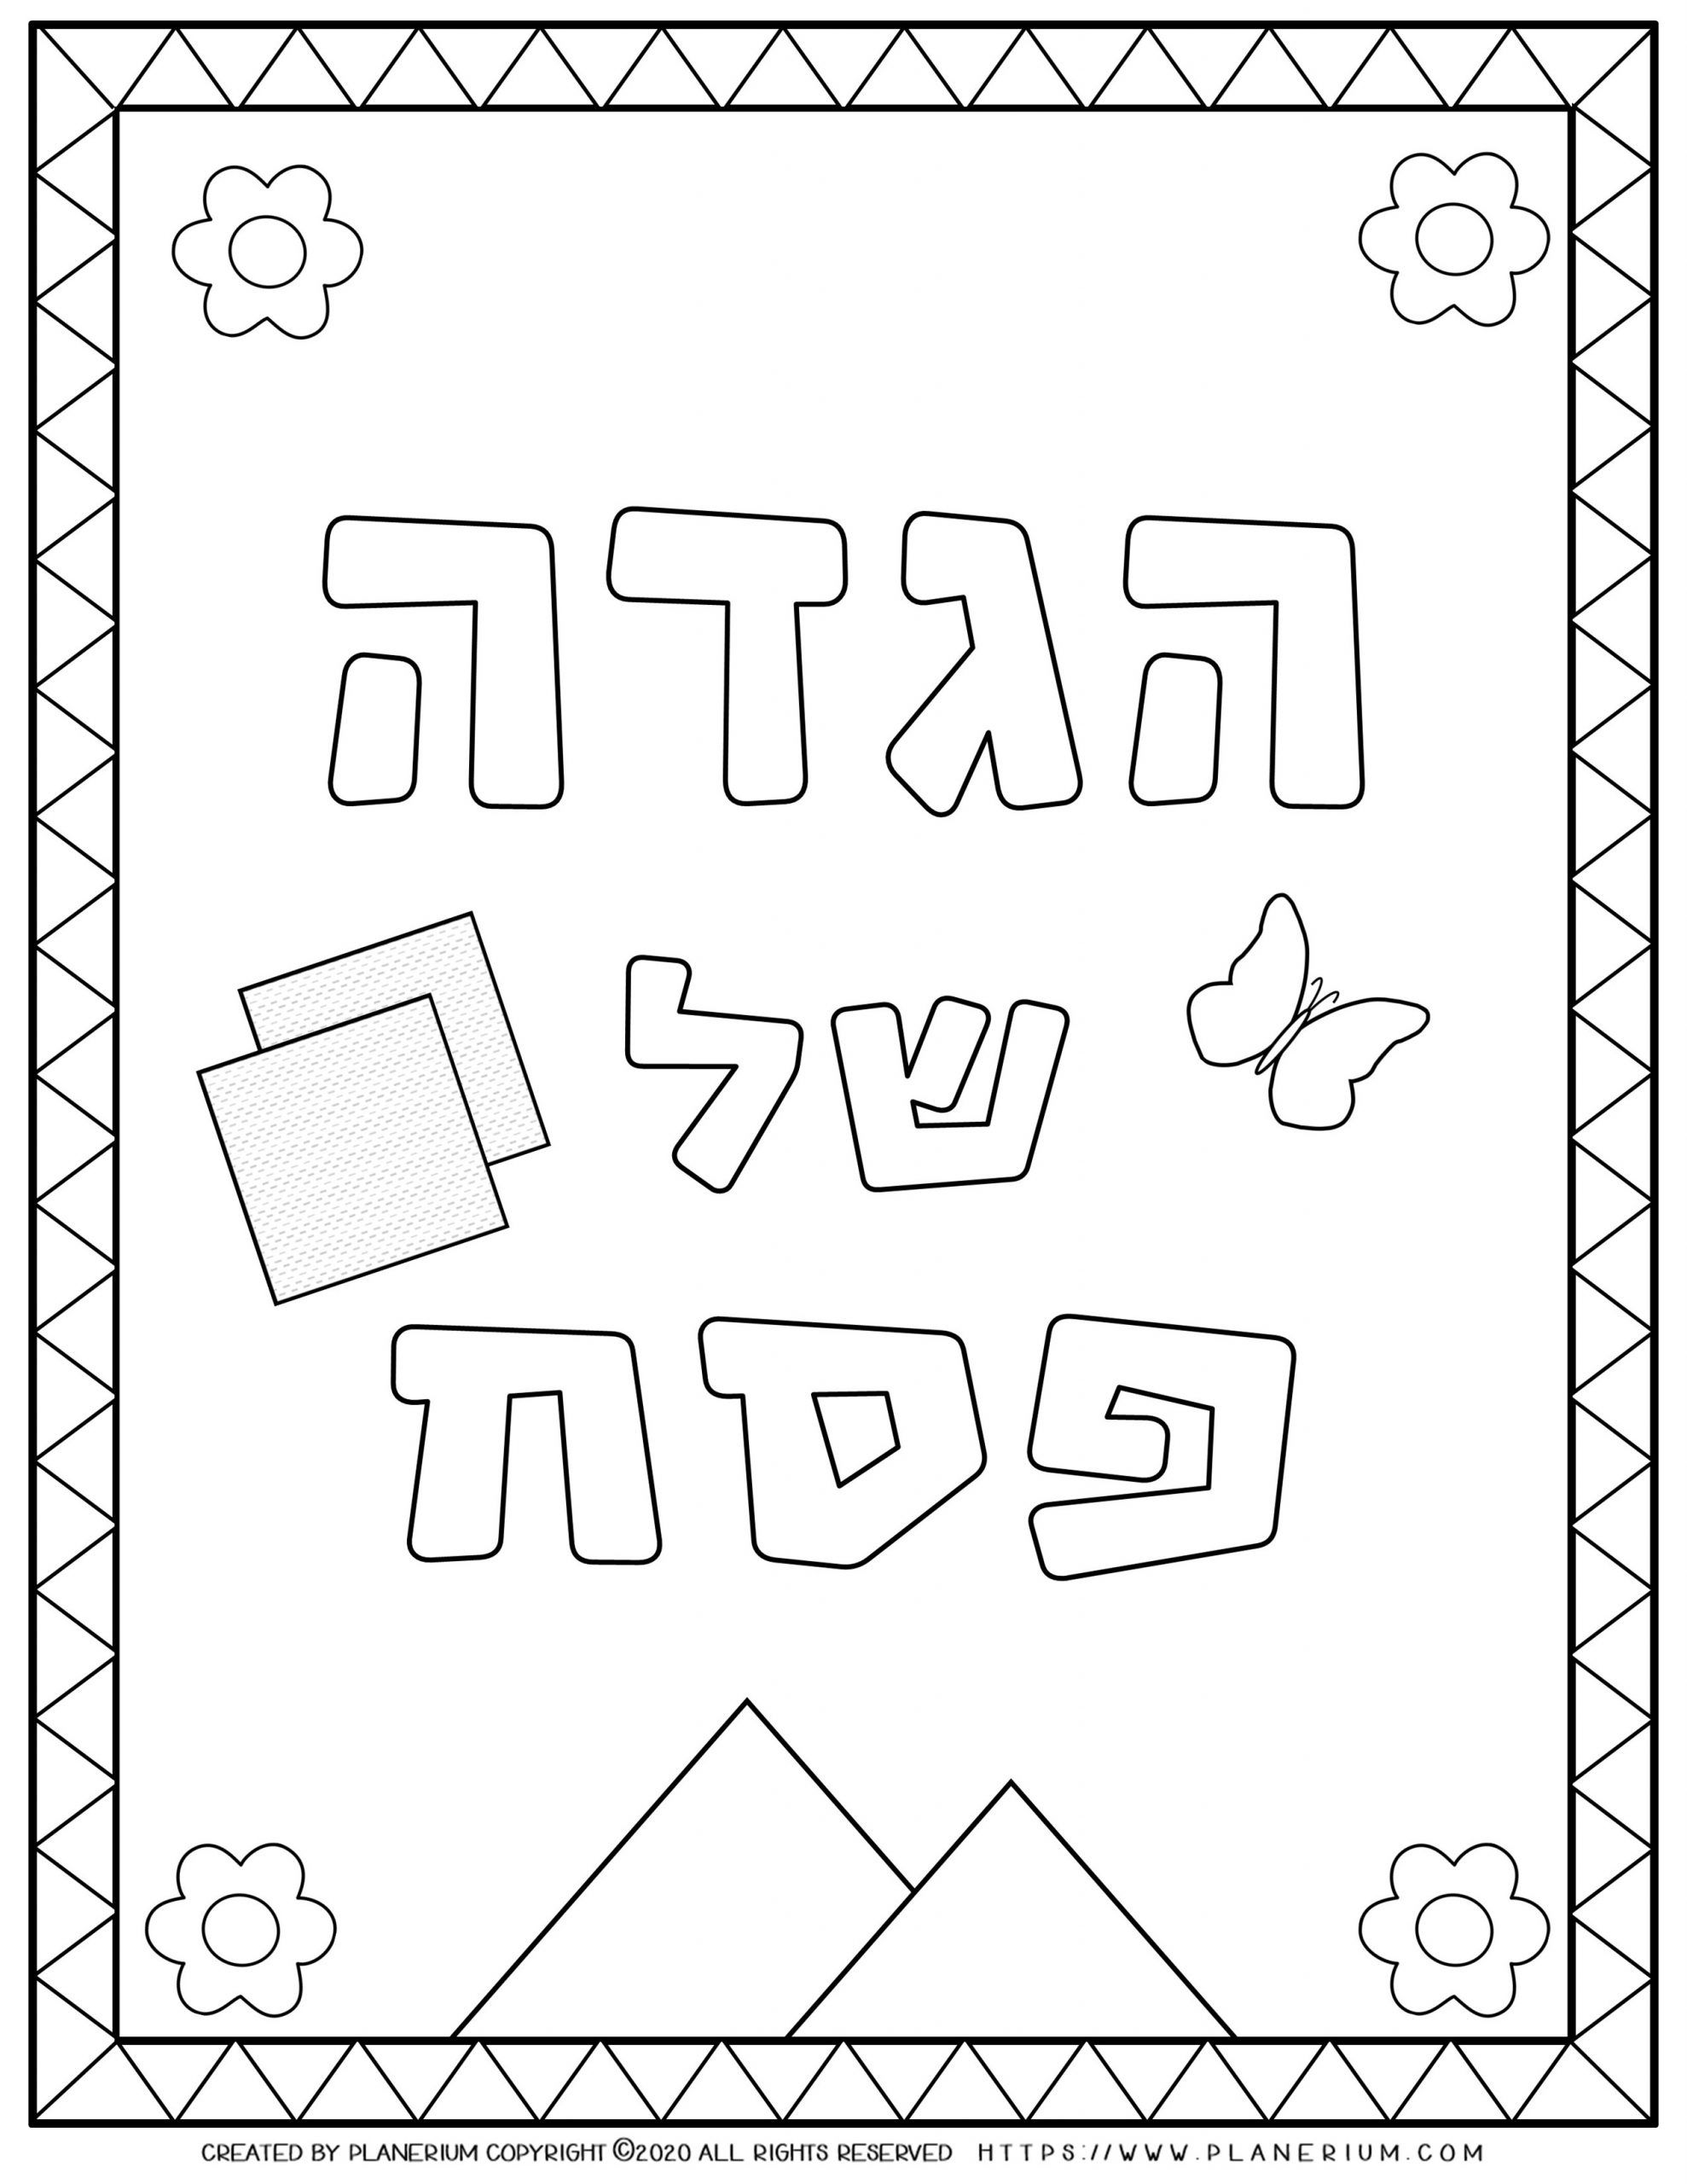 passover-coloring-page-haggadah-book-cover-in-hebrew-planerium